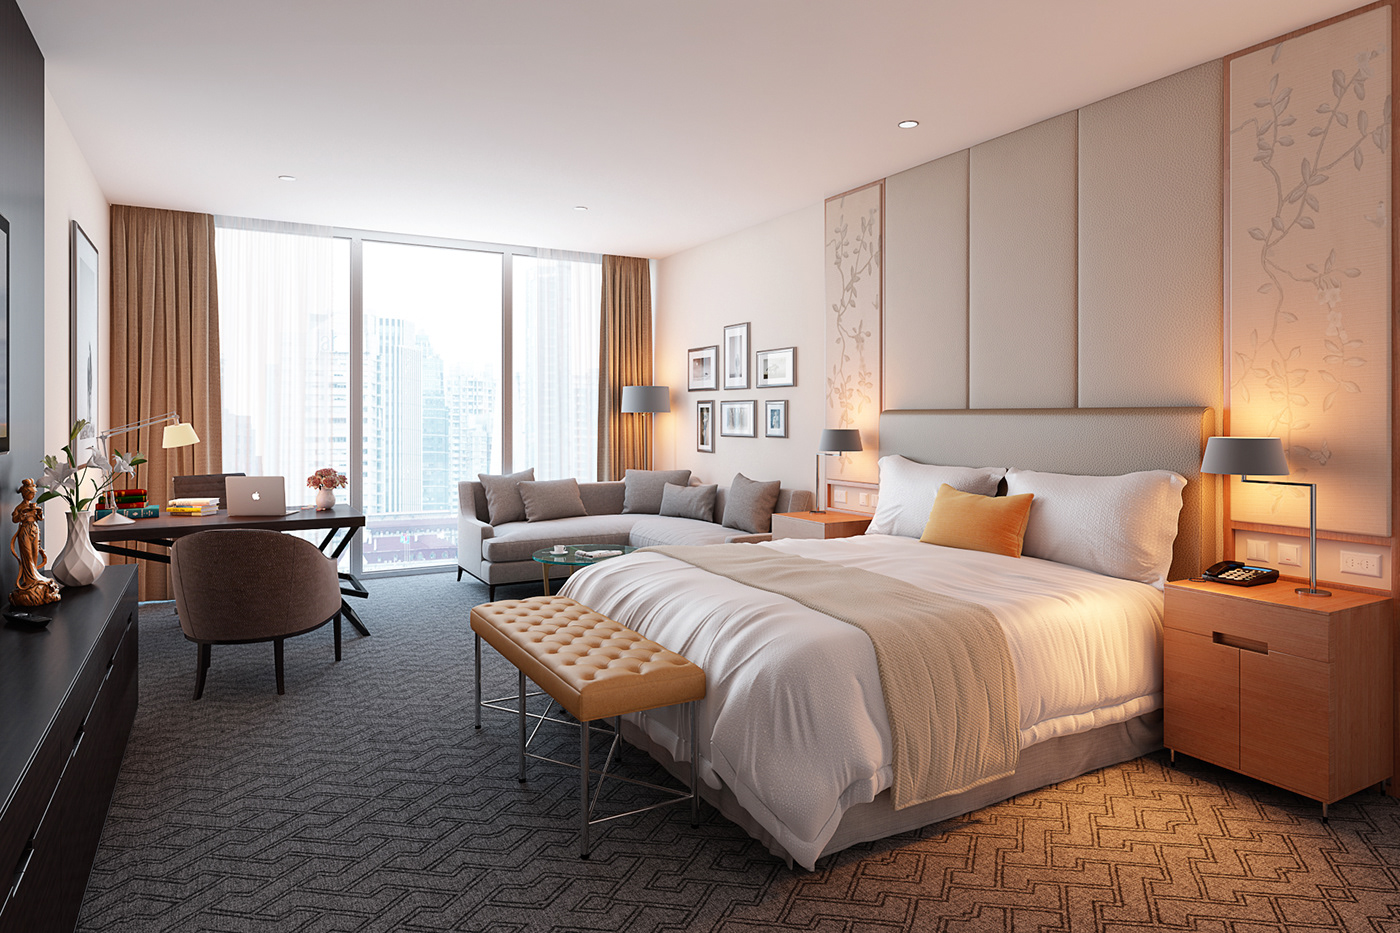 Luxury Hotel Room on Behance